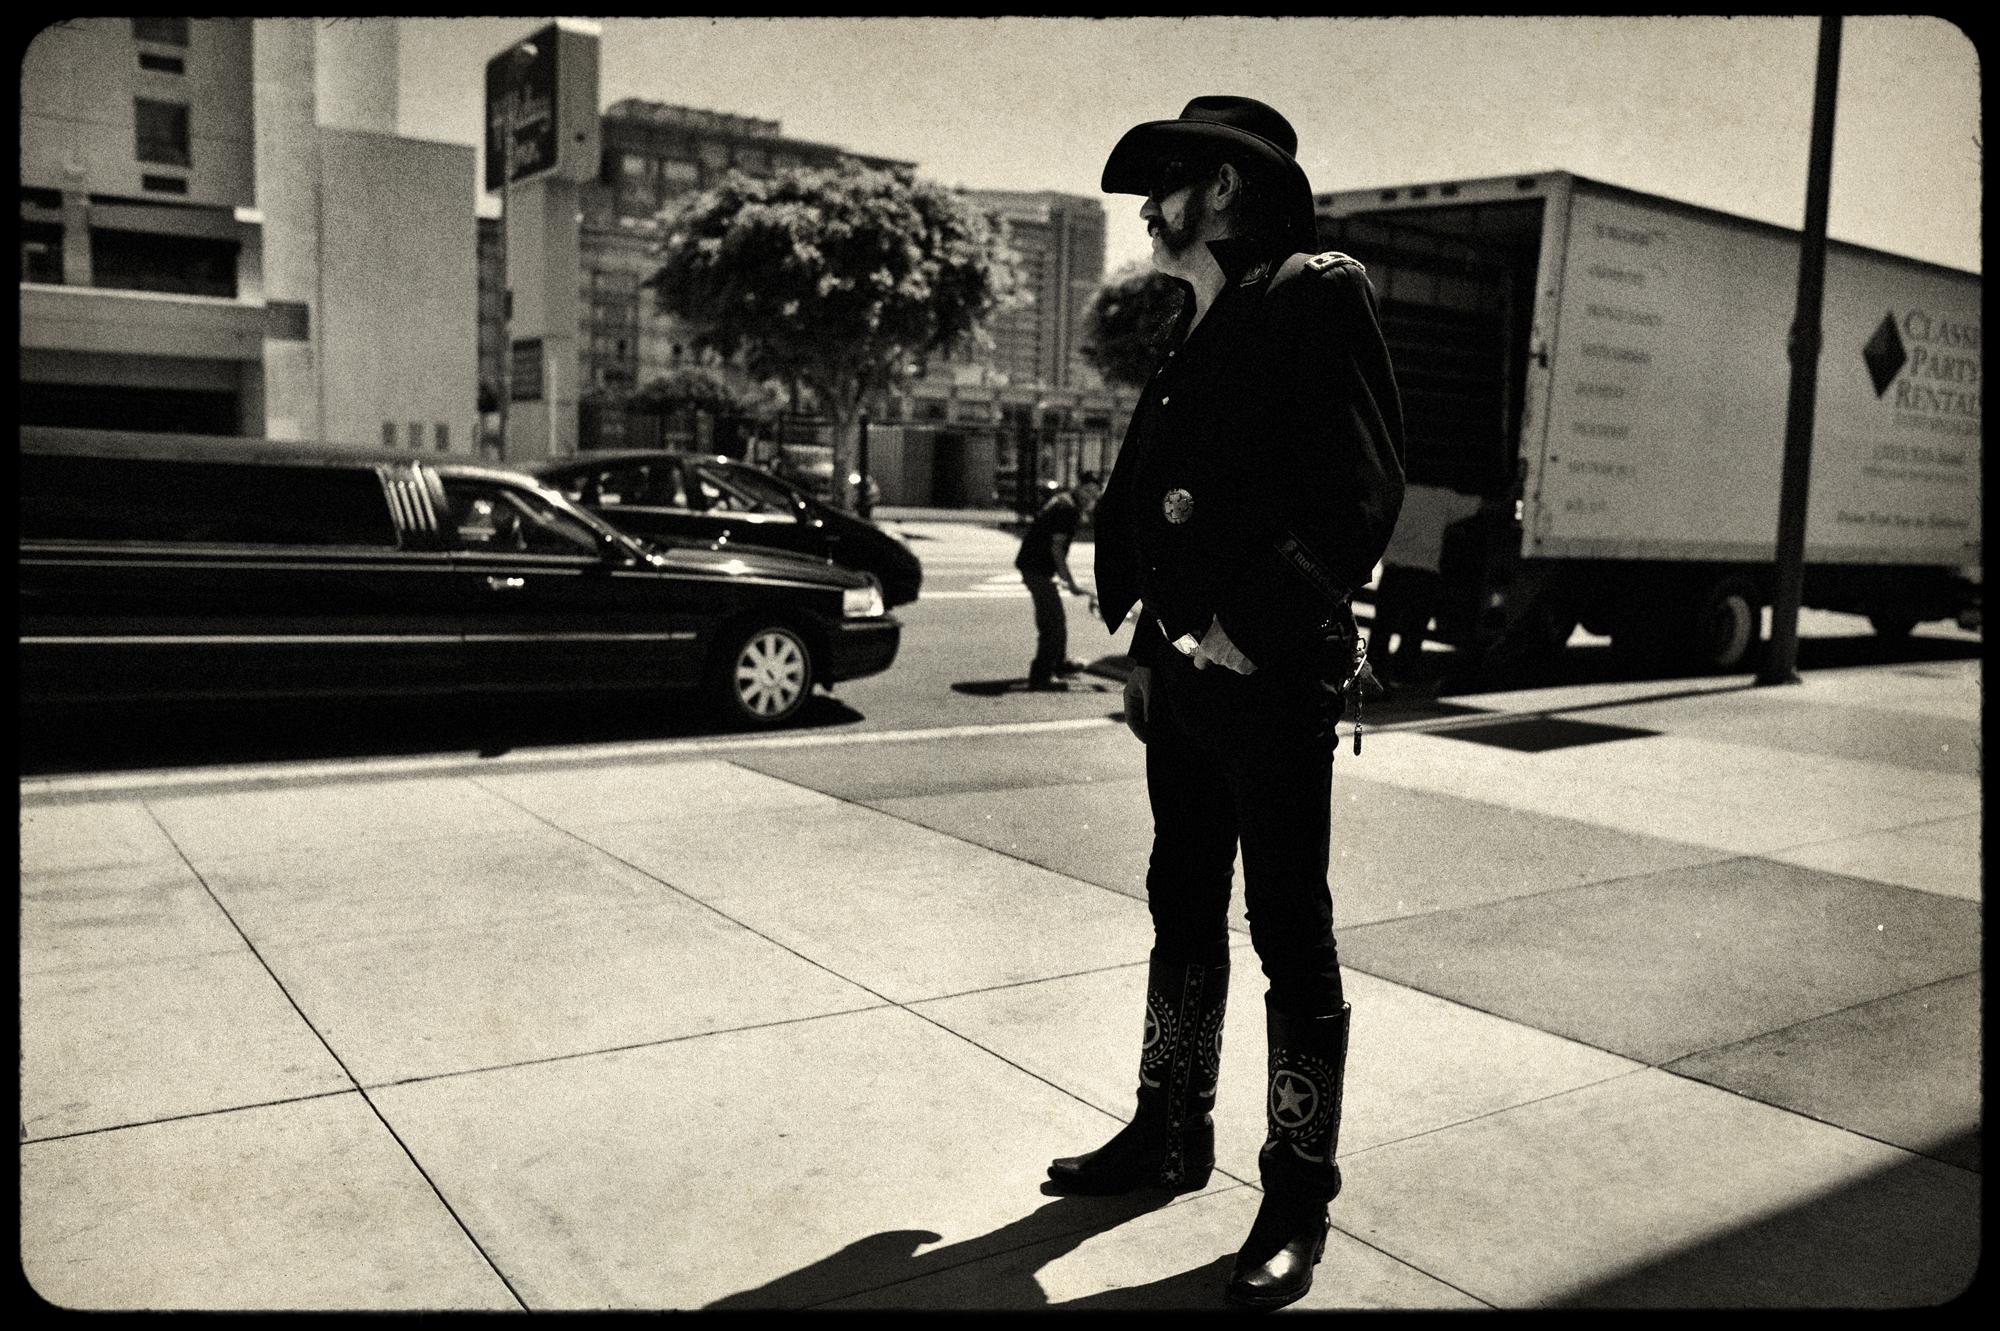 Roadkill - MotÃ¶rhead Los Angeles, California. March 2010. Lemmy...